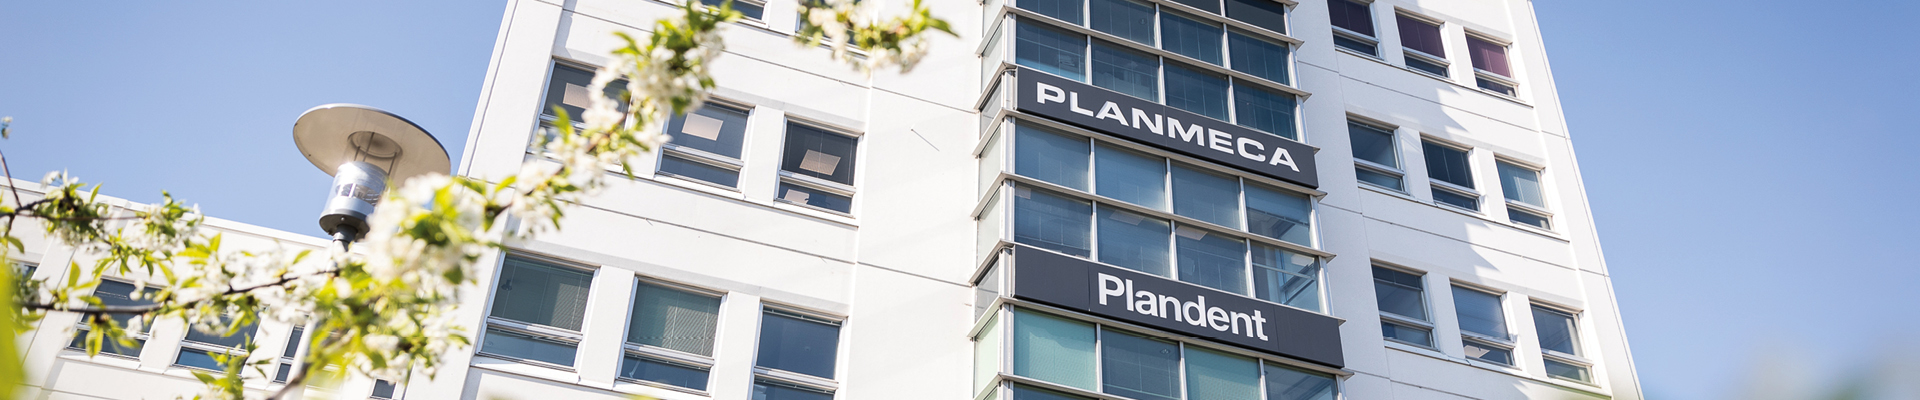 Planmeca Plandent HQ